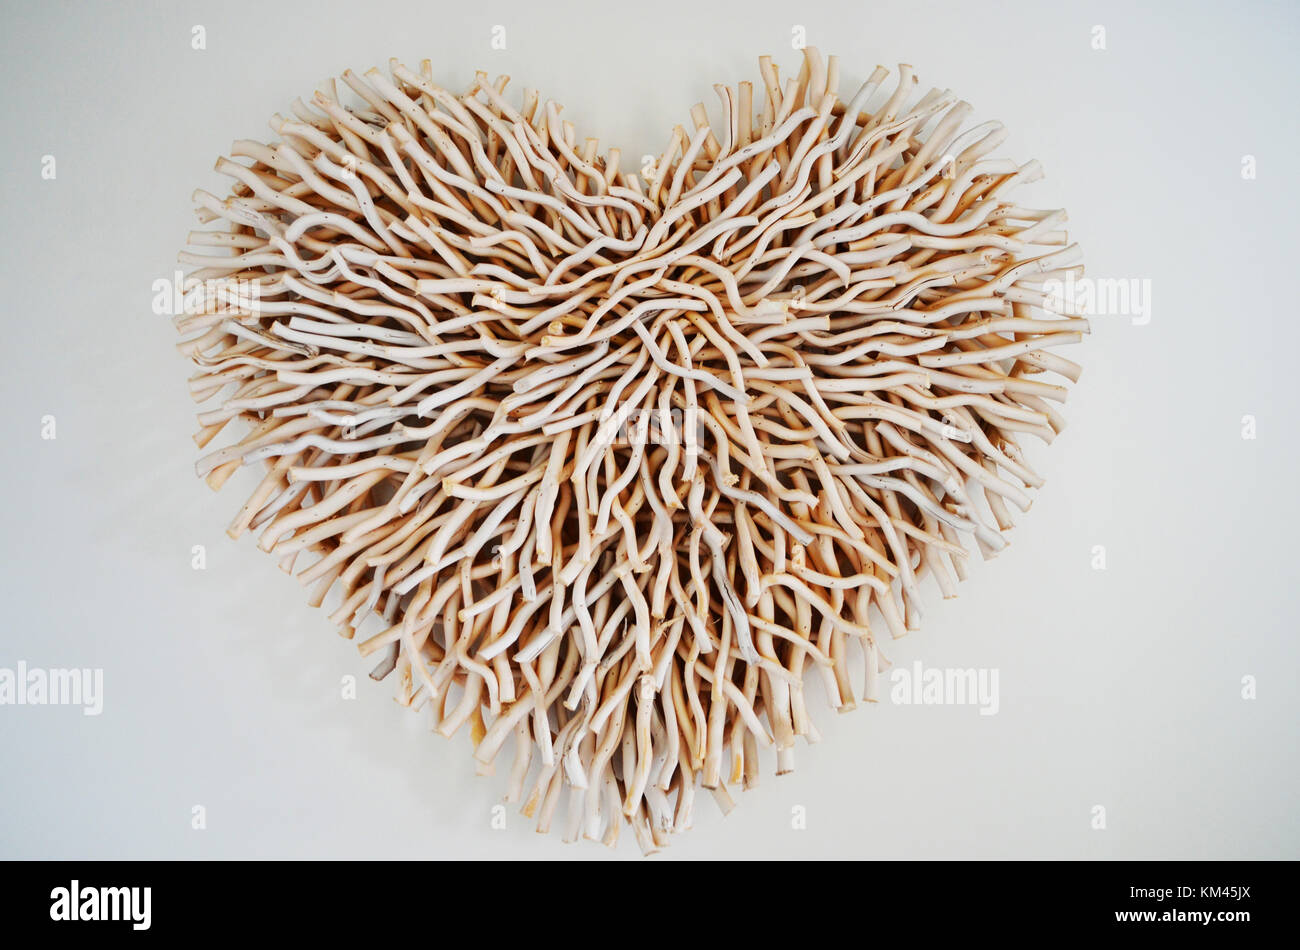 Heart shape made out of sticks Stock Photo - Alamy